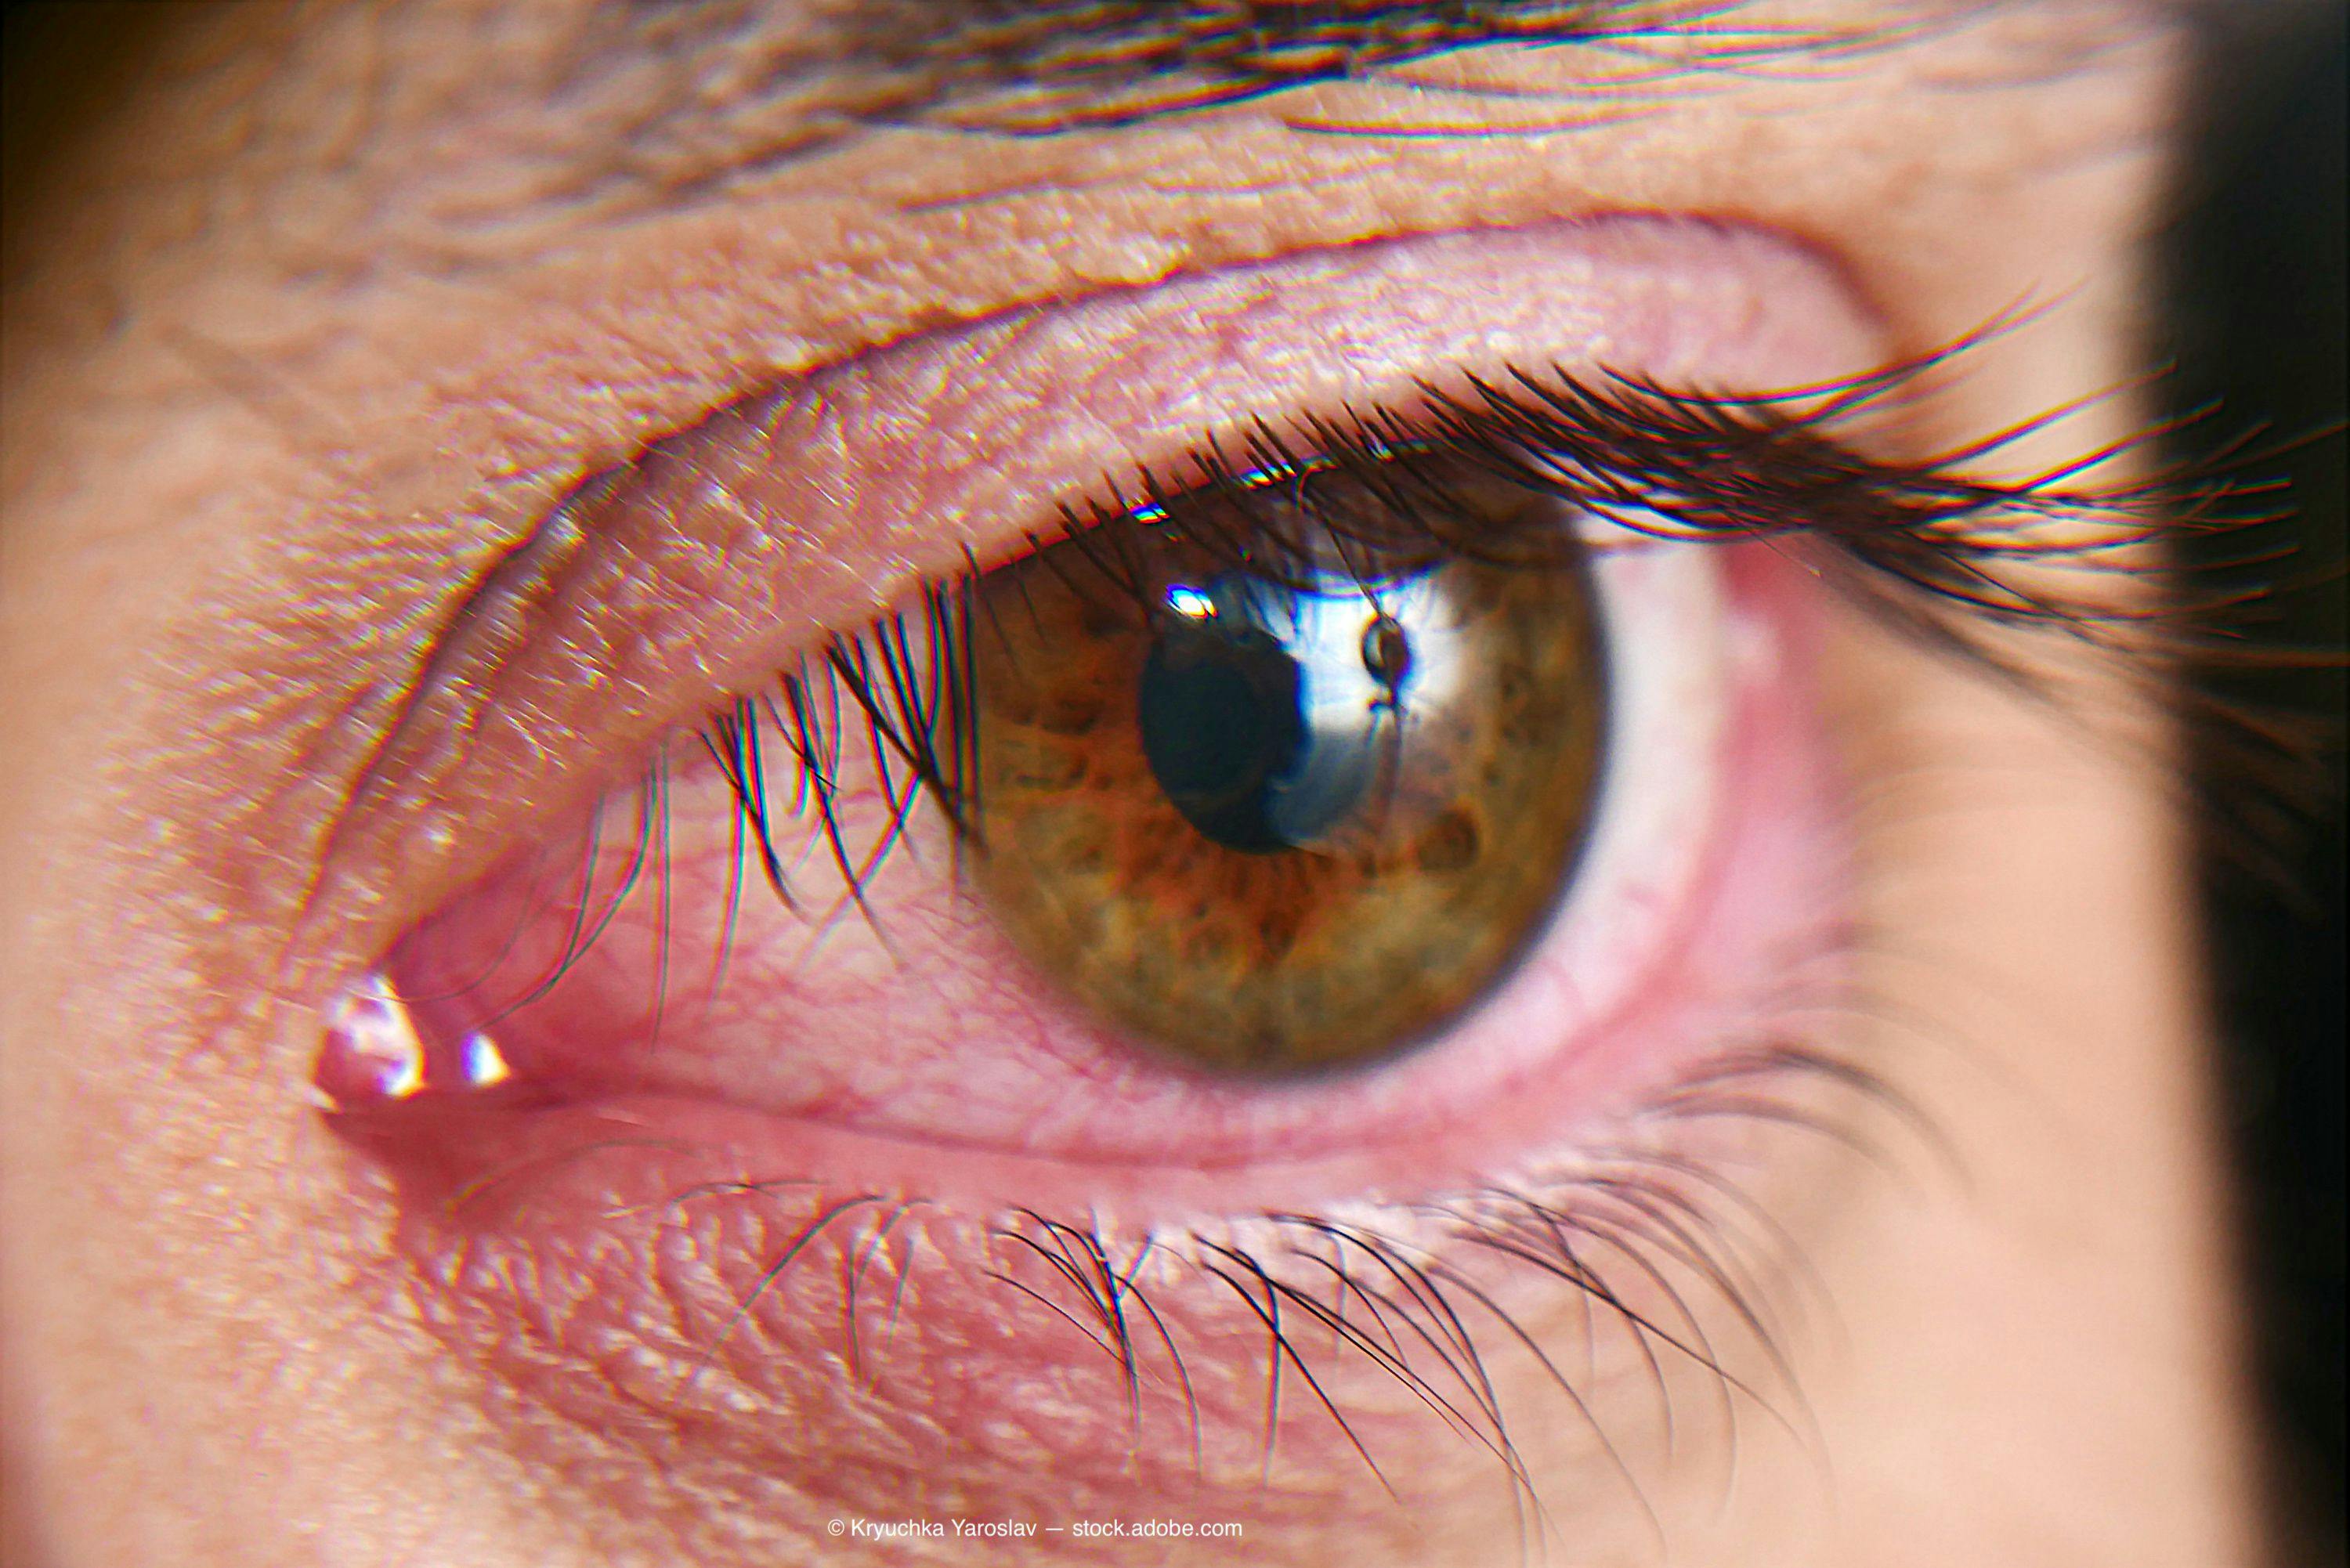 Treatment option for dry eye secondary to graft-vs-host disease